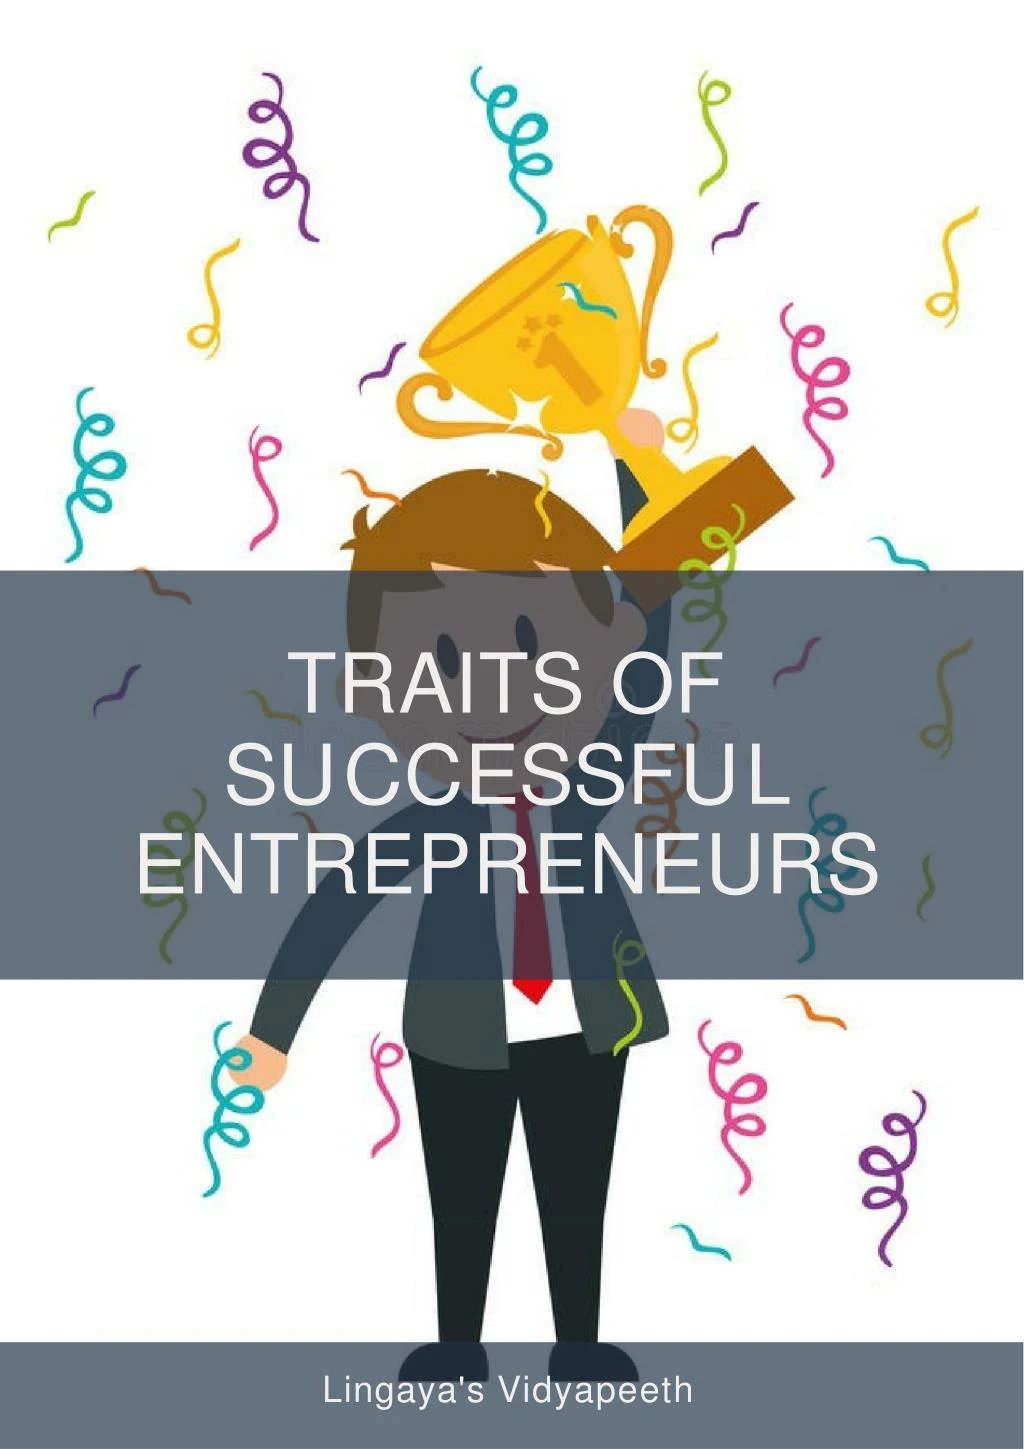 traits of s u cc e ss f u l entrepreneurs